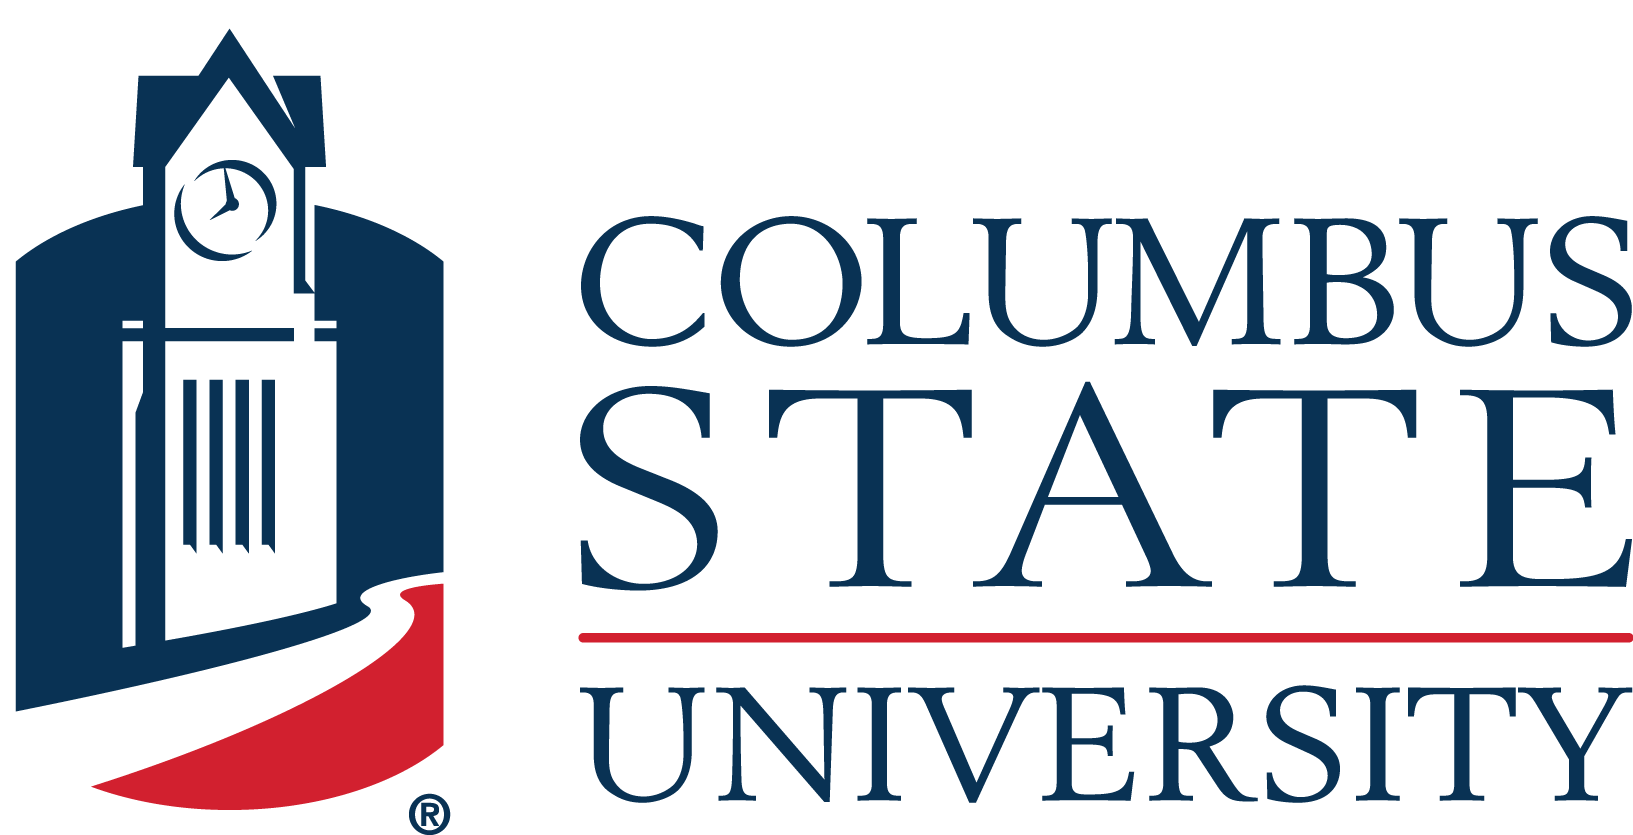 columbus state university